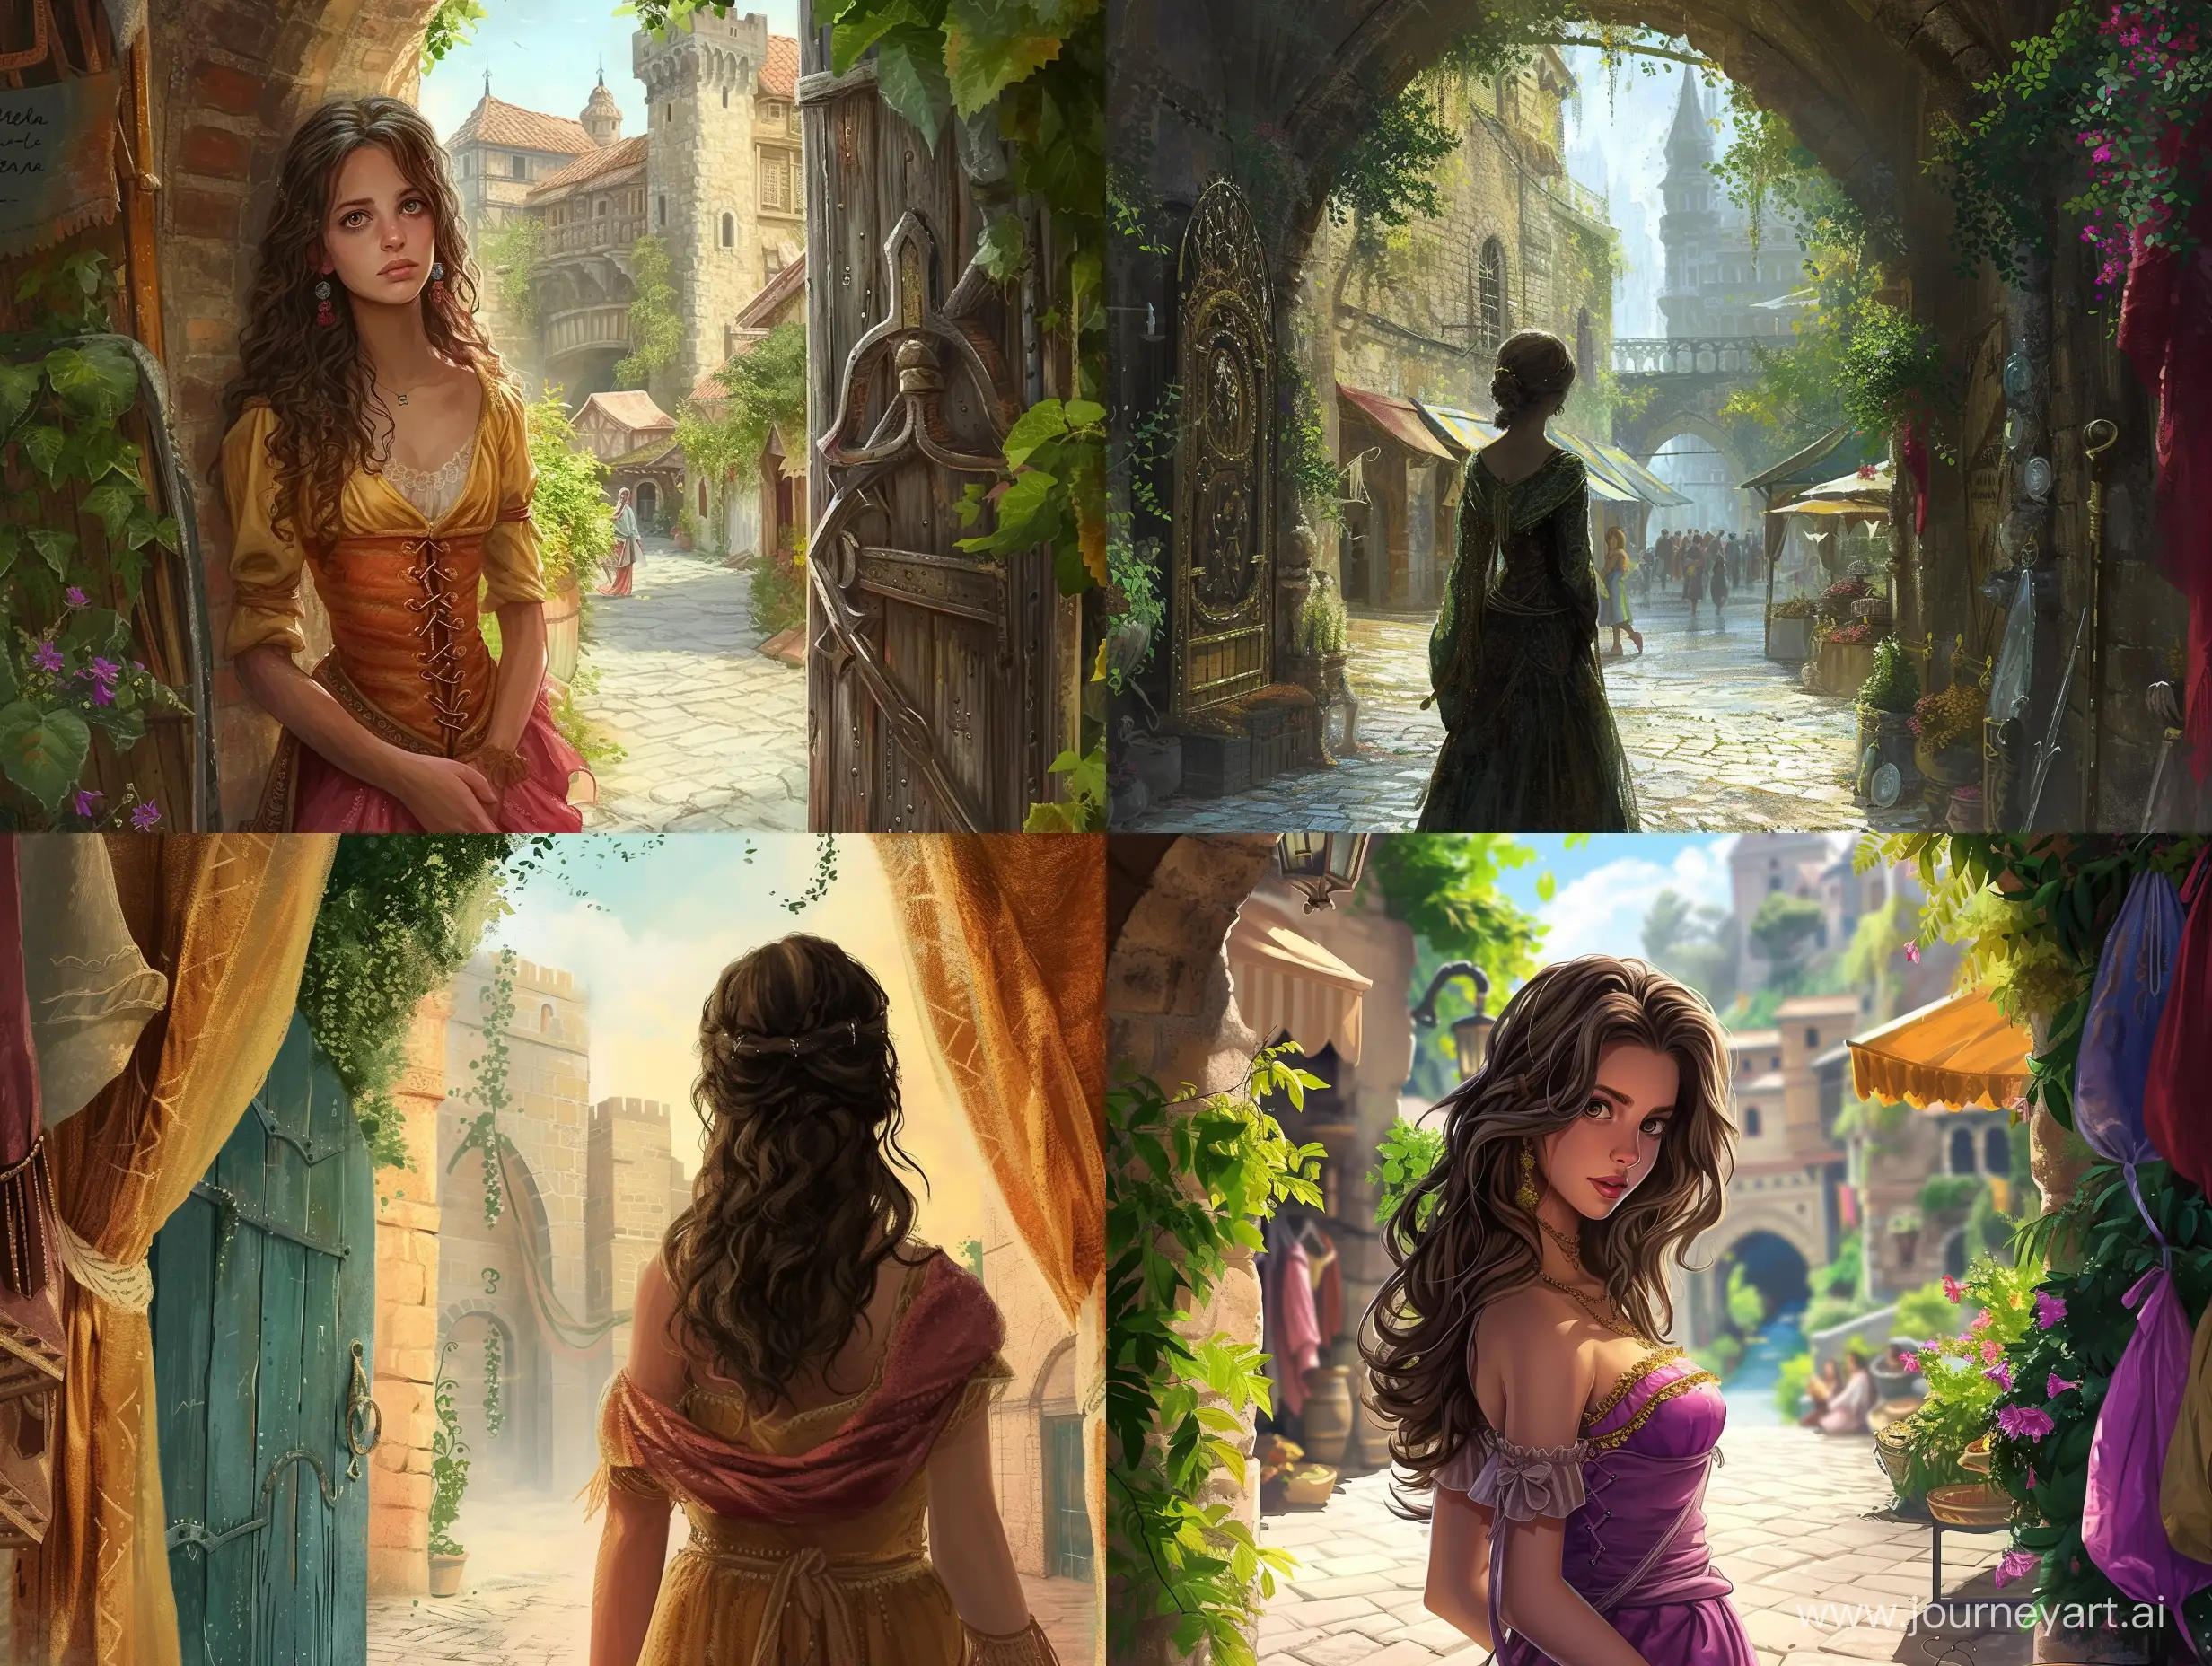 Adventurous-Young-Woman-Discovers-Enchanted-World-Through-Magical-Door